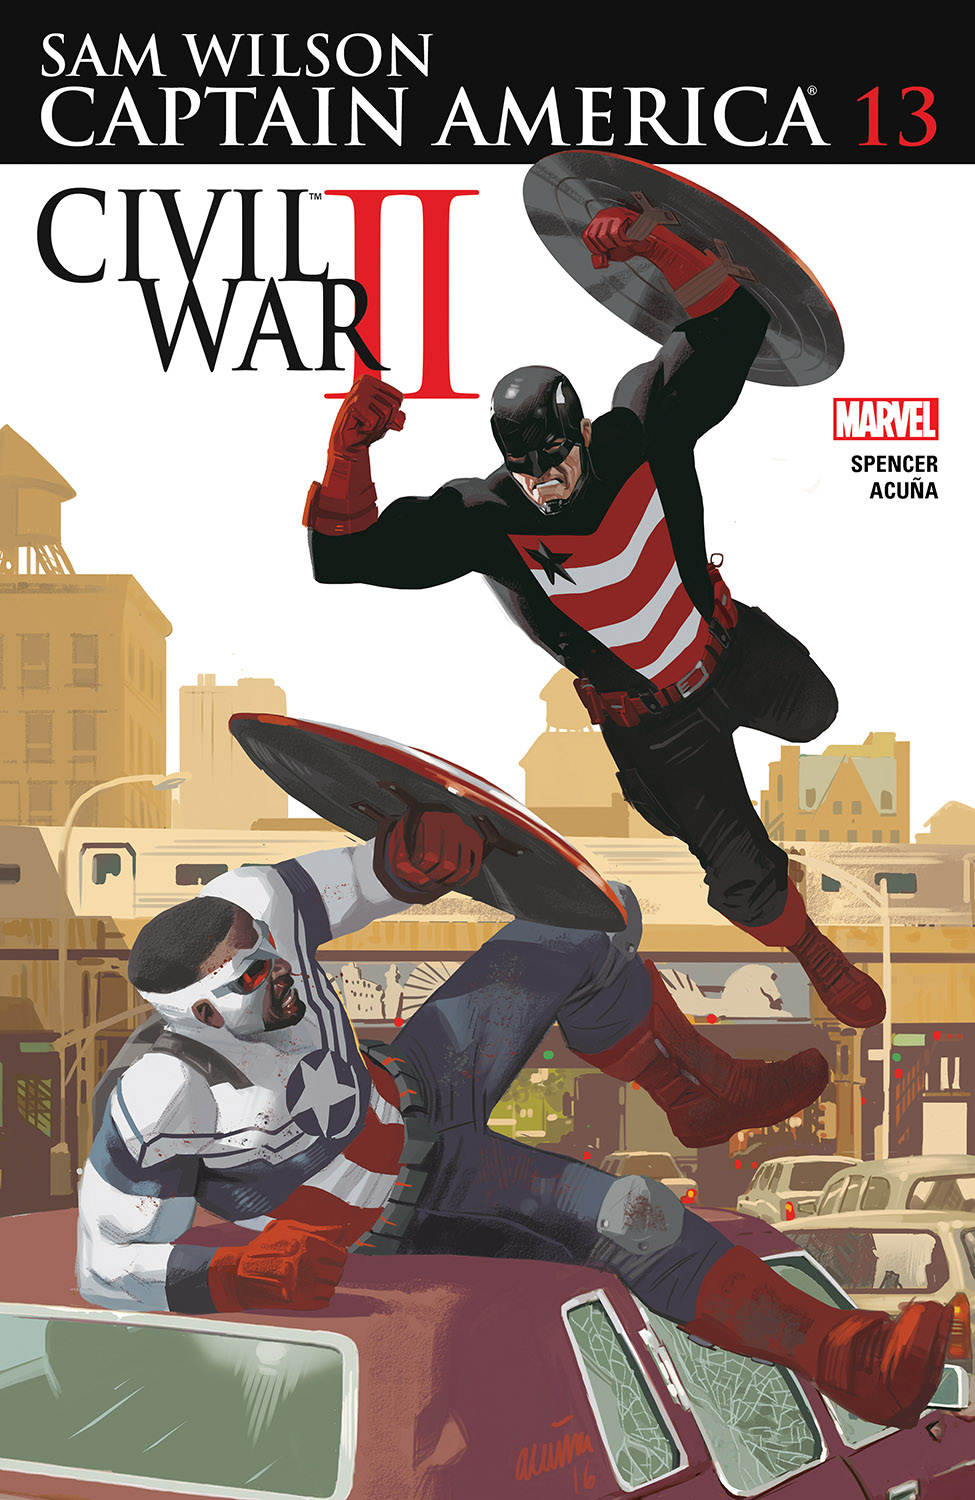 Captain America: Sam Wilson (2015) #13